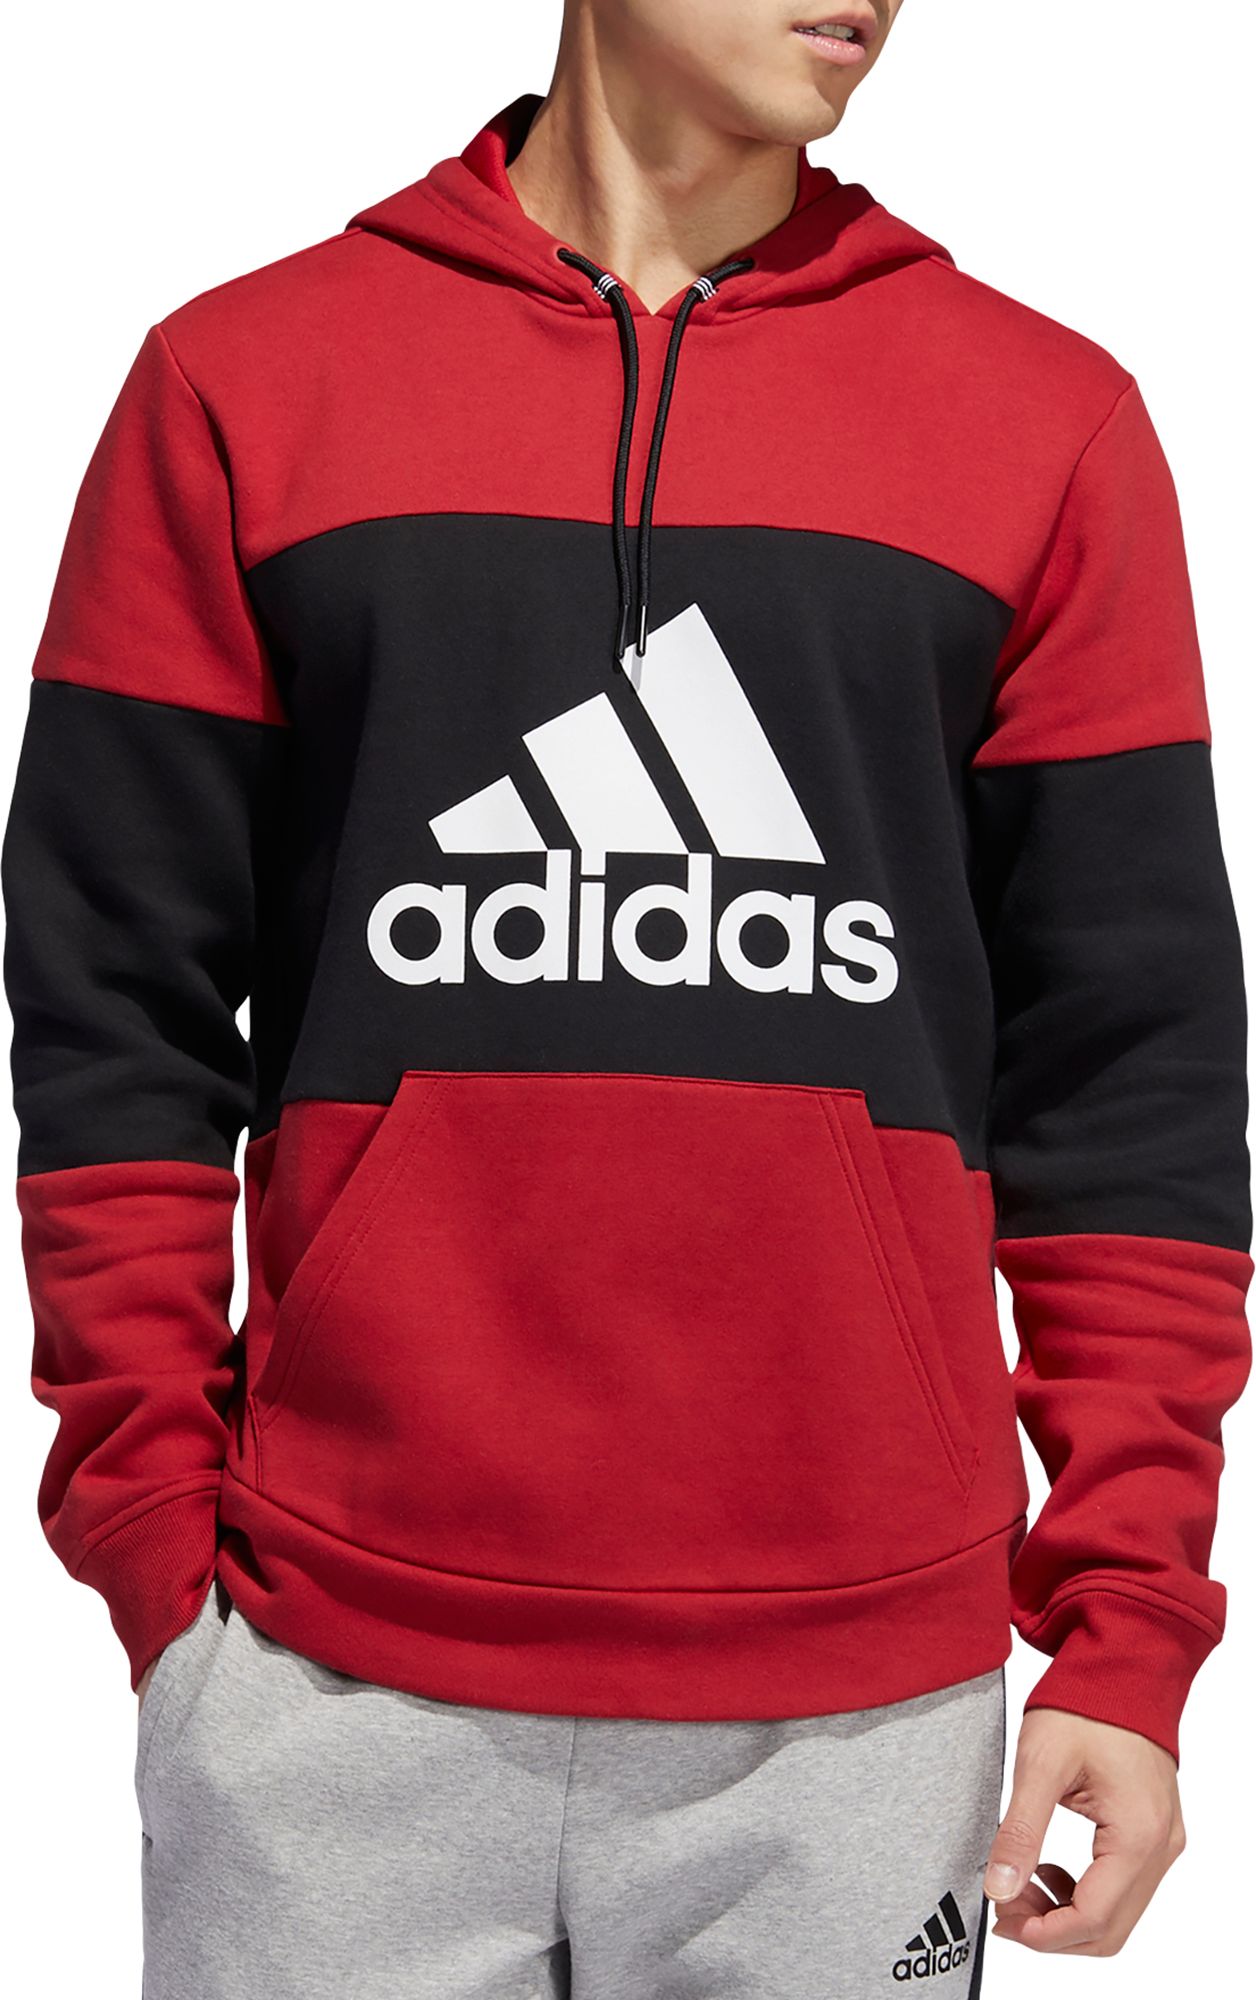 adidas hoodie red and black